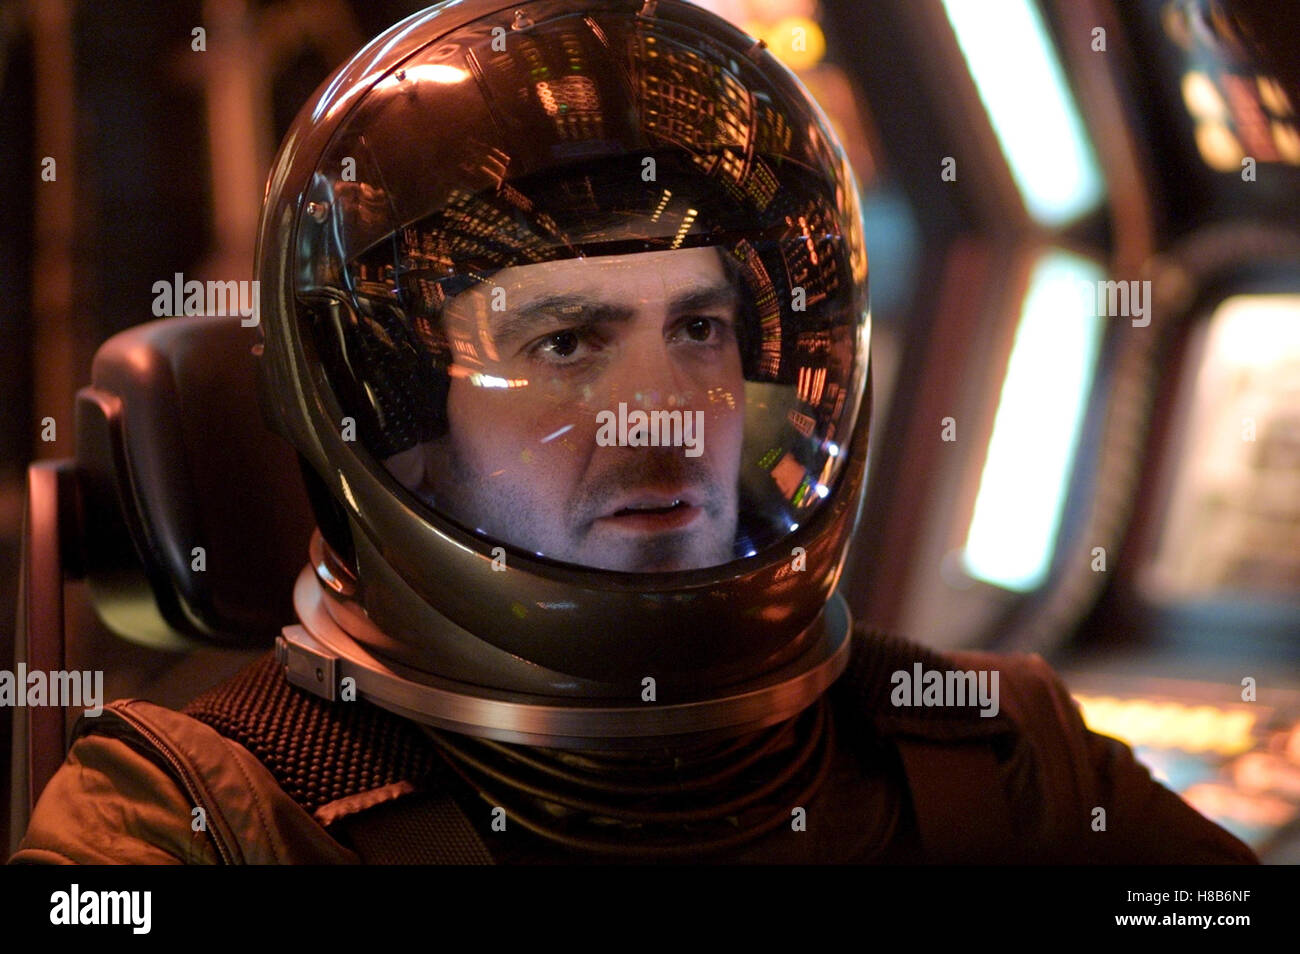 Solaris, (SOLARIS) USA 2002, Regie: Steven Soderbergh, GEORGE CLOONEY, Key: Astronaut, Raumanzug, Helm Stock Photo